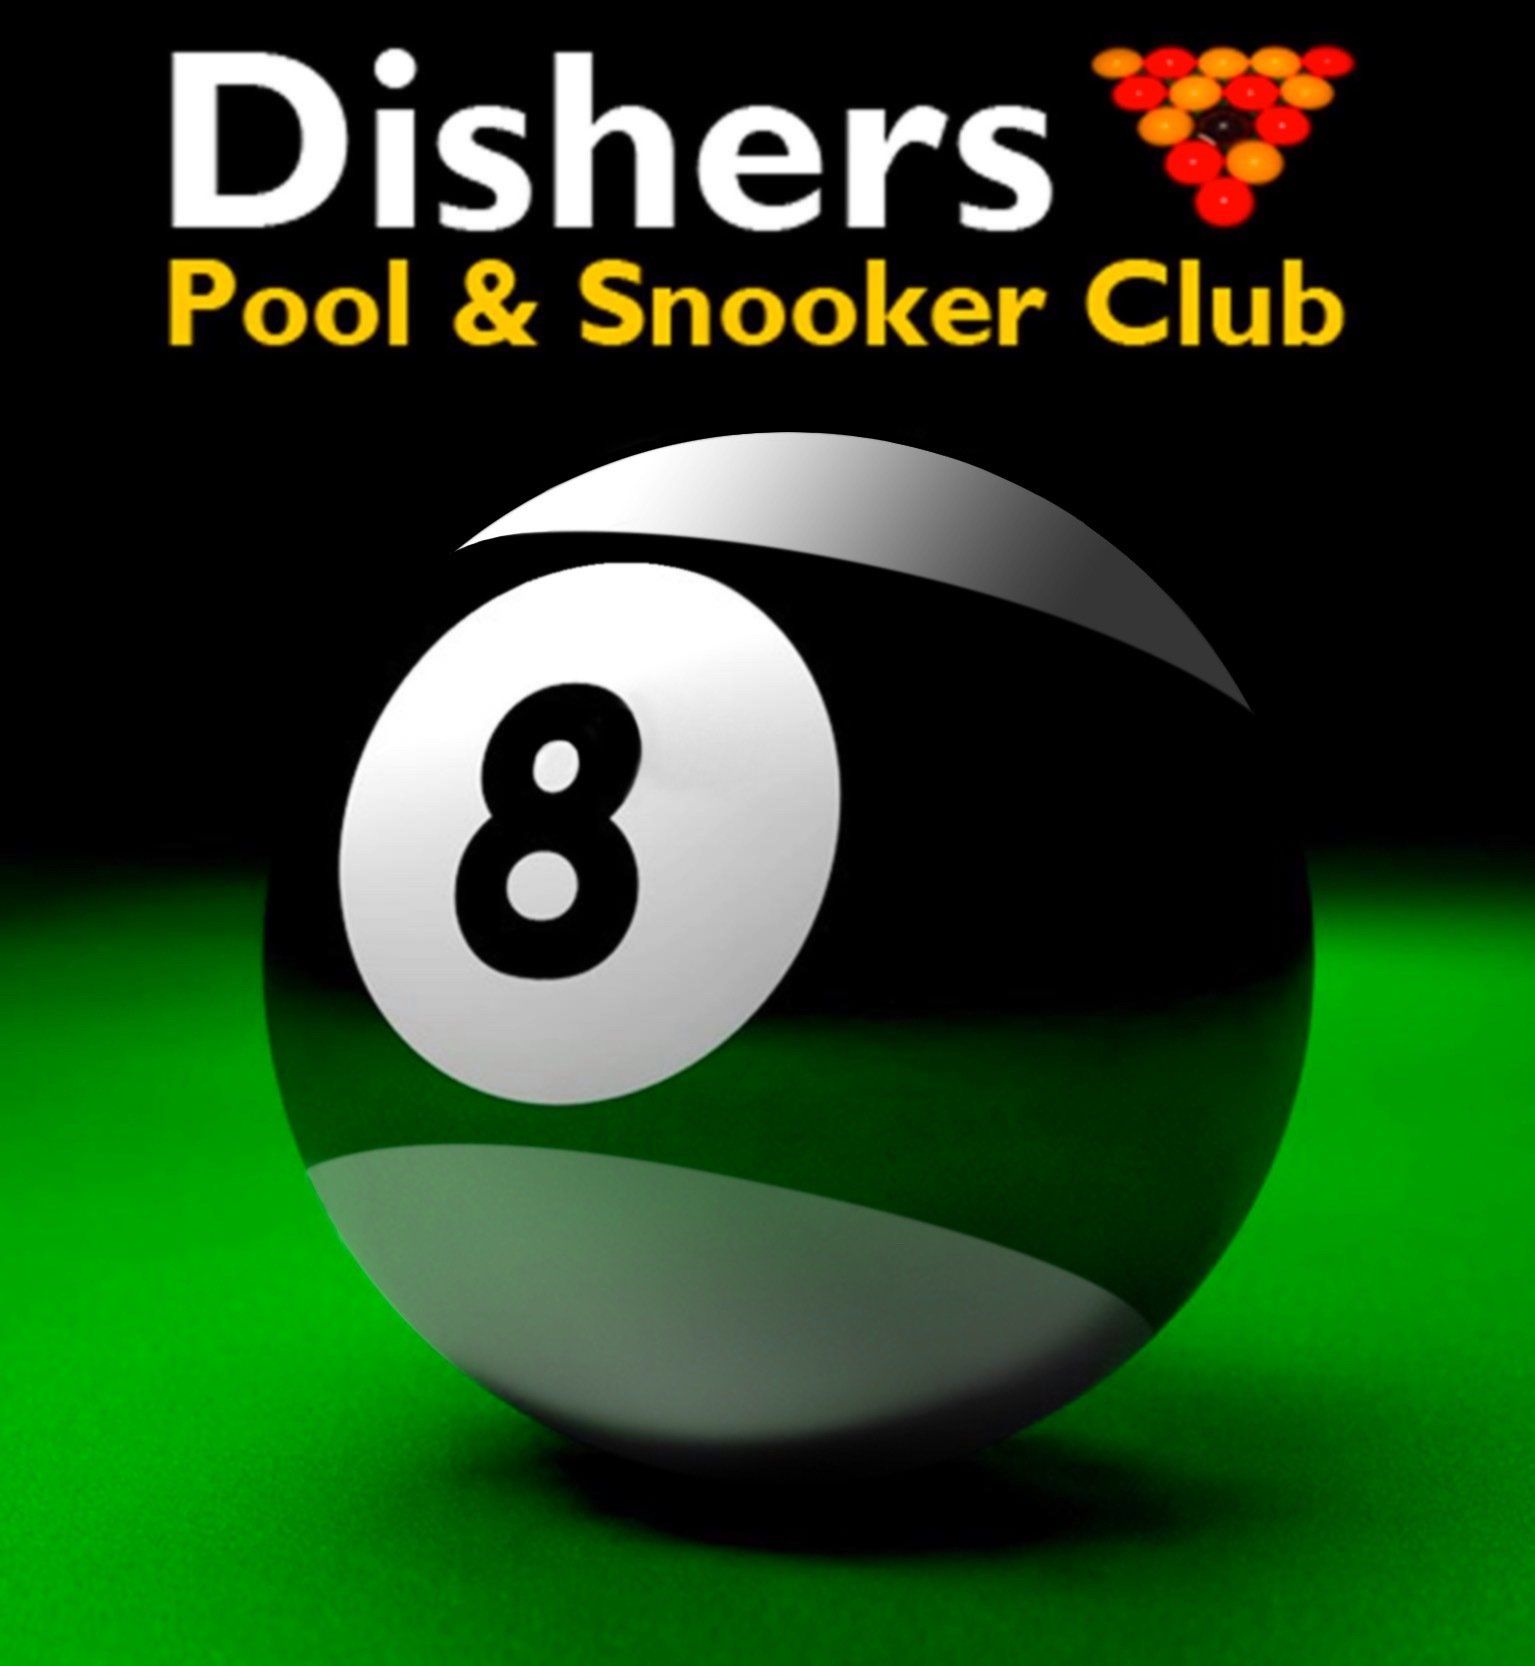 dishers pool & snooker club